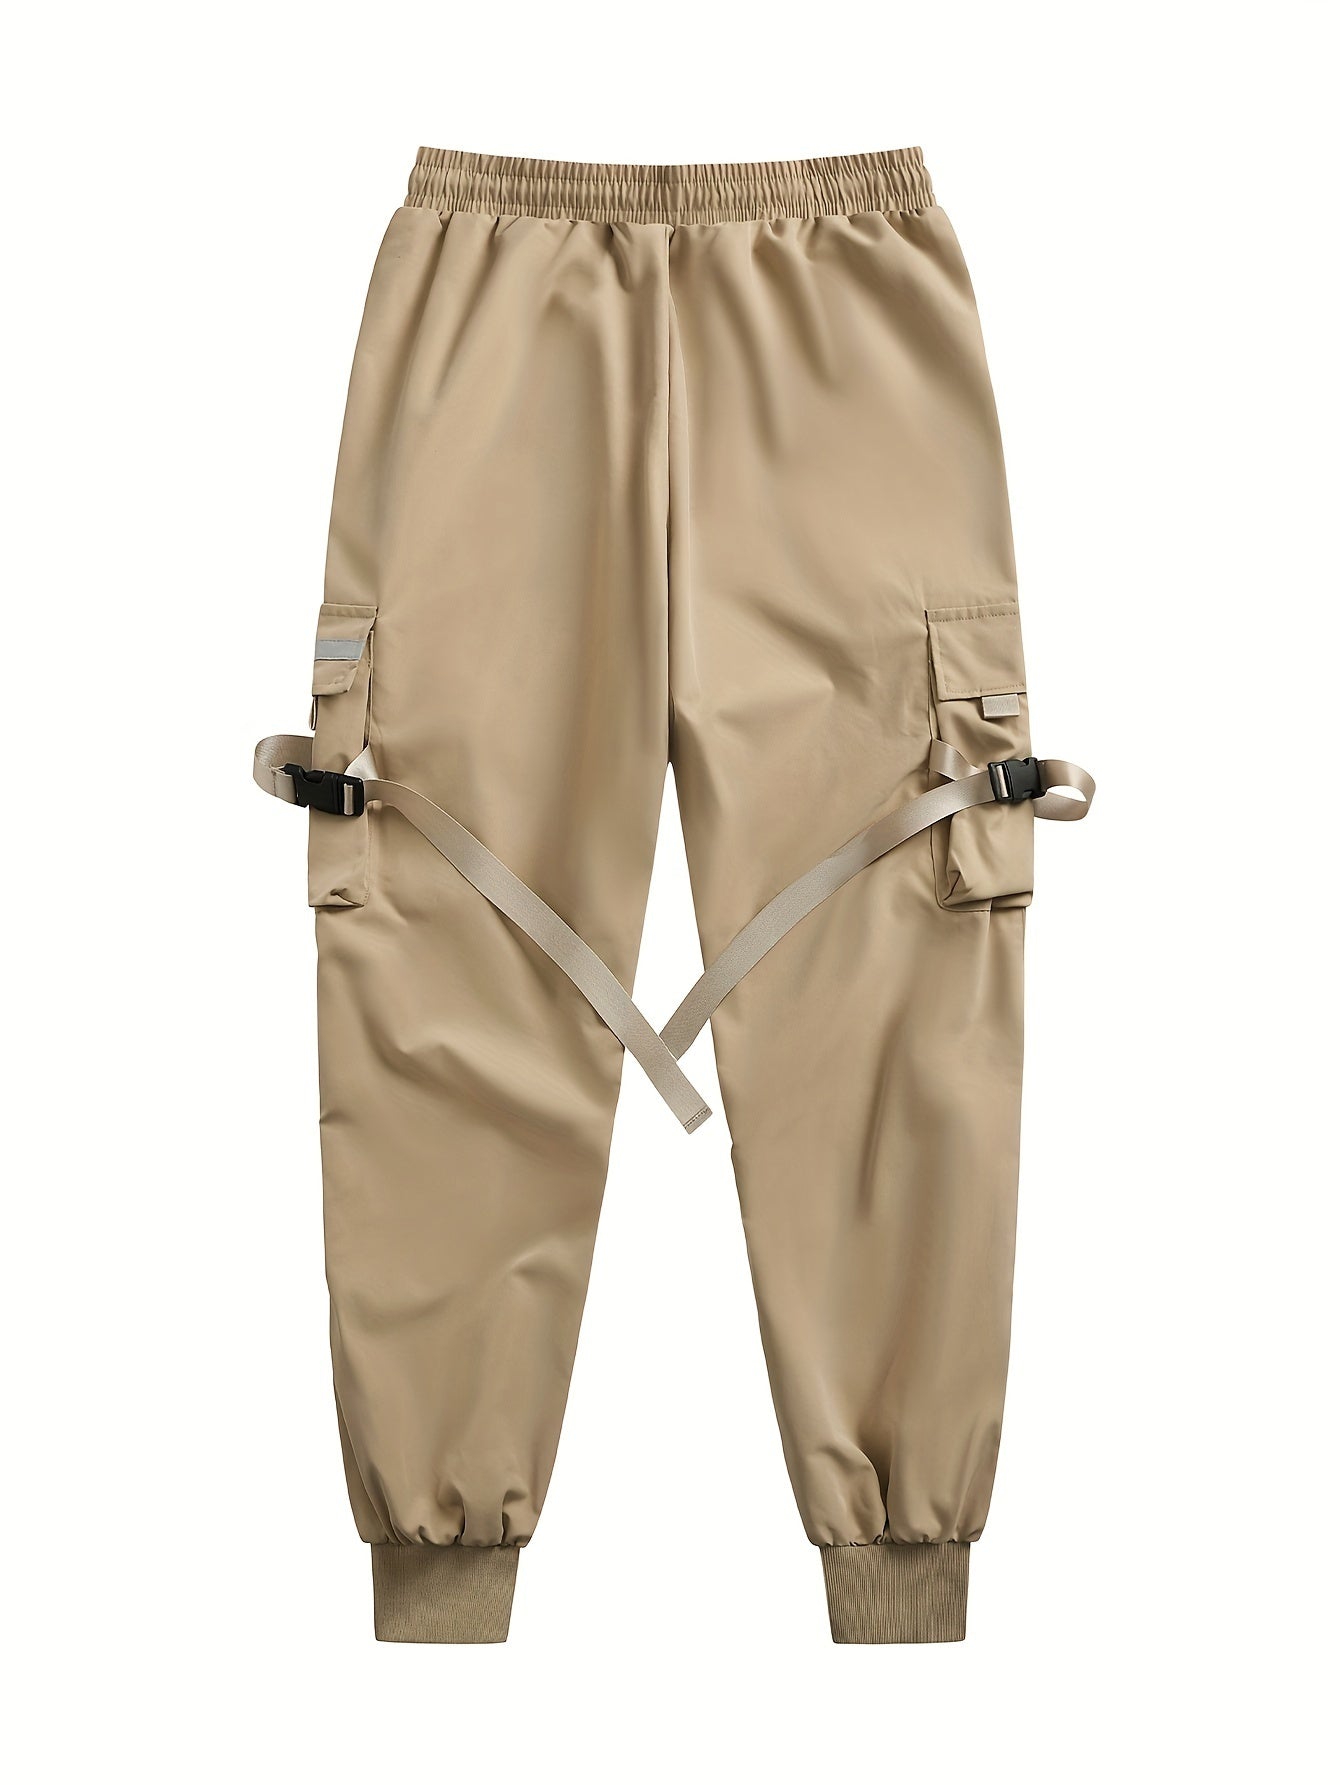 Classic Design Multi Flap Pockets Cargo Pants,Men's Loose Fit Drawstring Kpop Cargo Pants，For Skateboarding,Street,Outdoor Camping